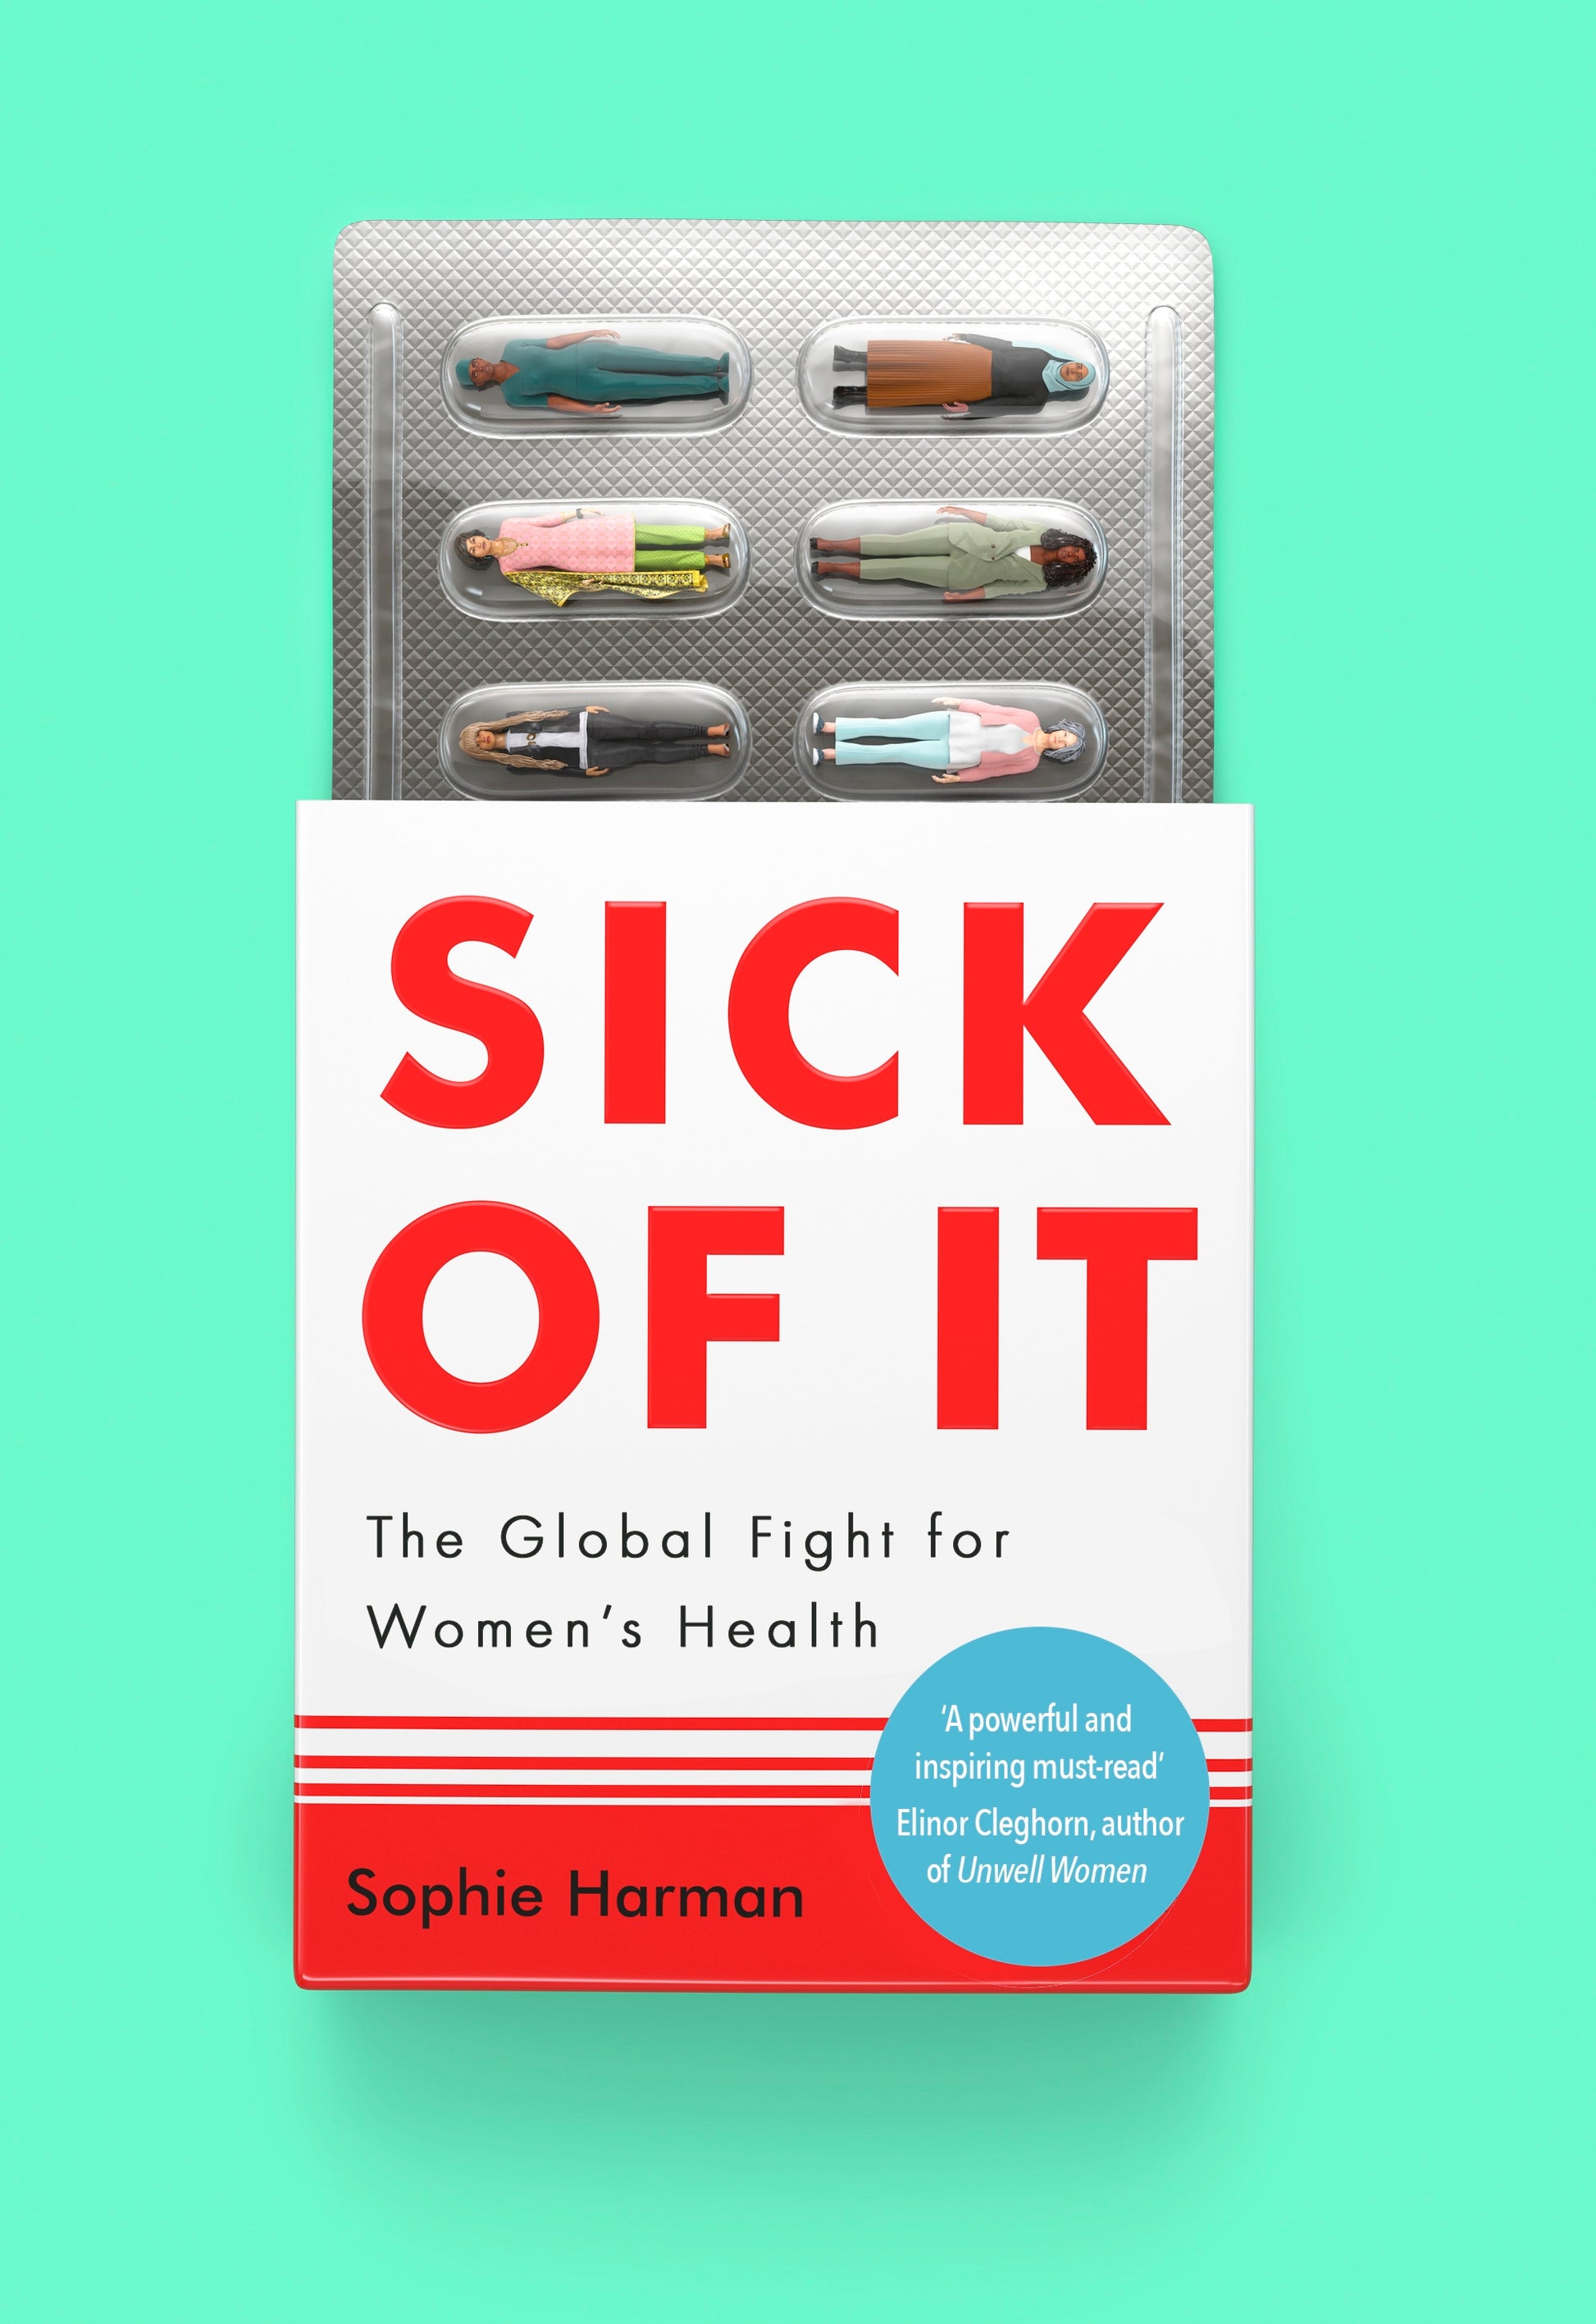 Sick of It by Sophie Harman